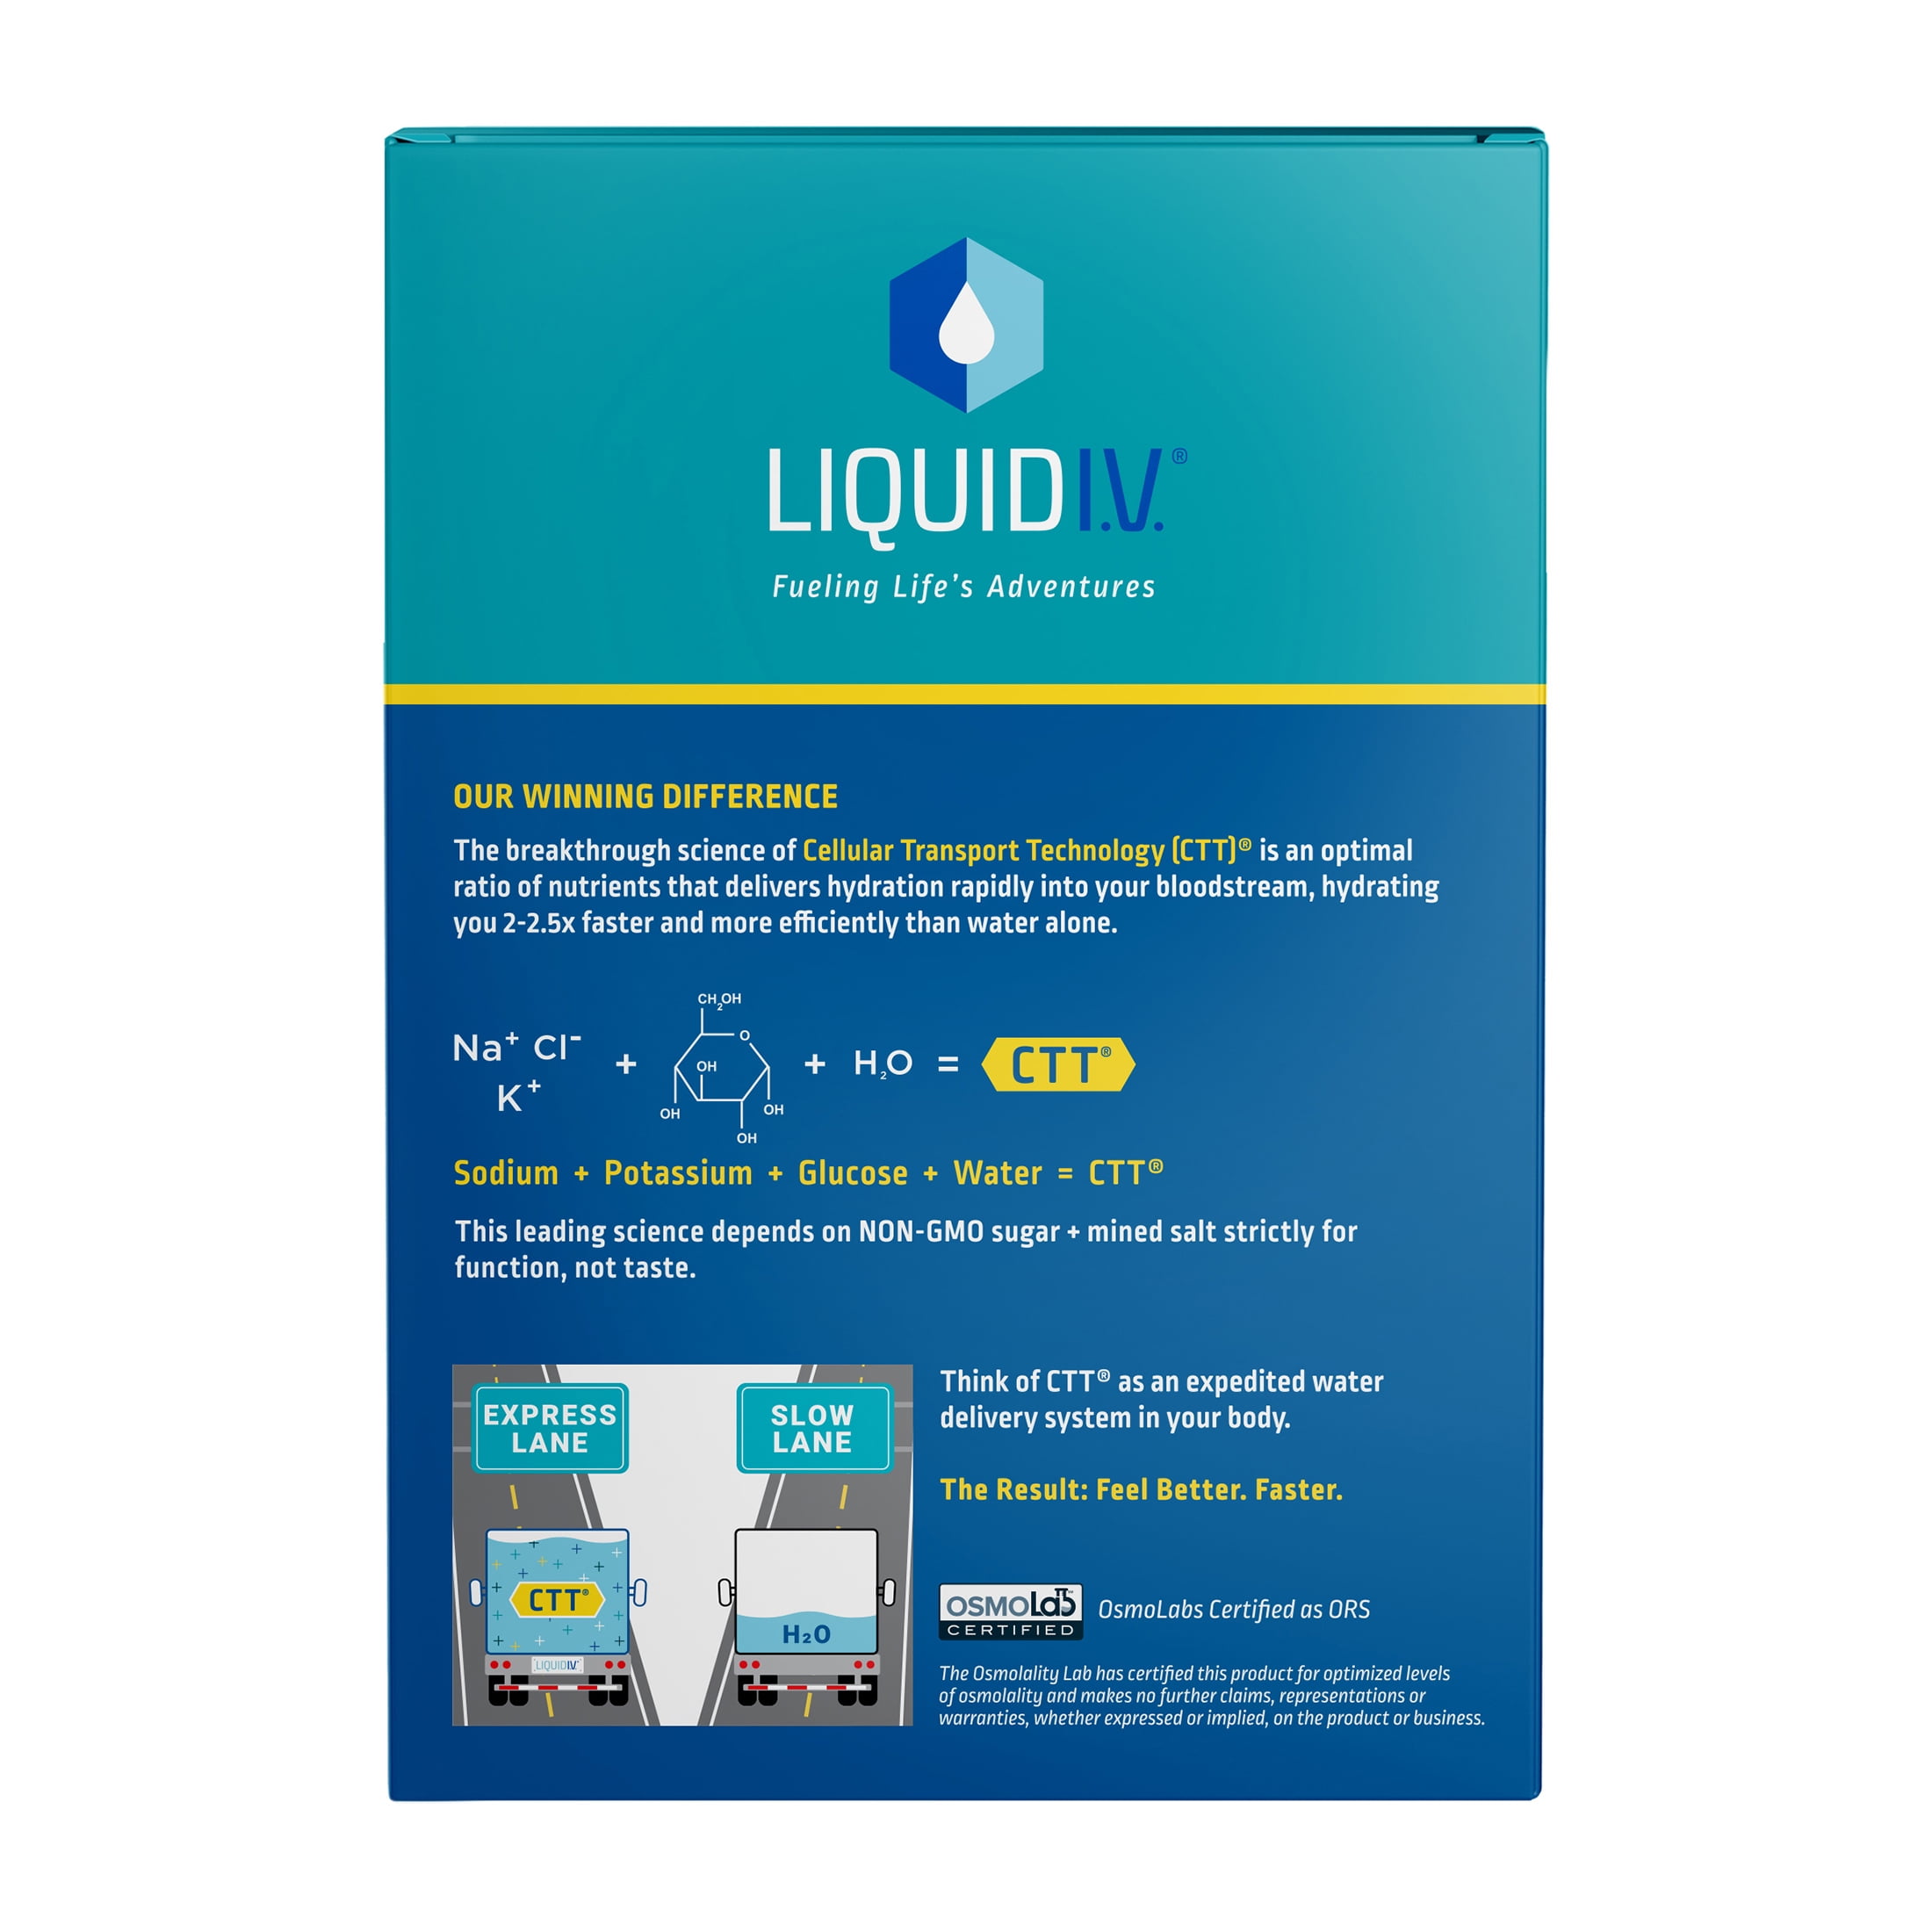 NEW Liquid I.V. Hydration Multiplier Lemon Lime 20 Sealed Packets  Electrolytes $